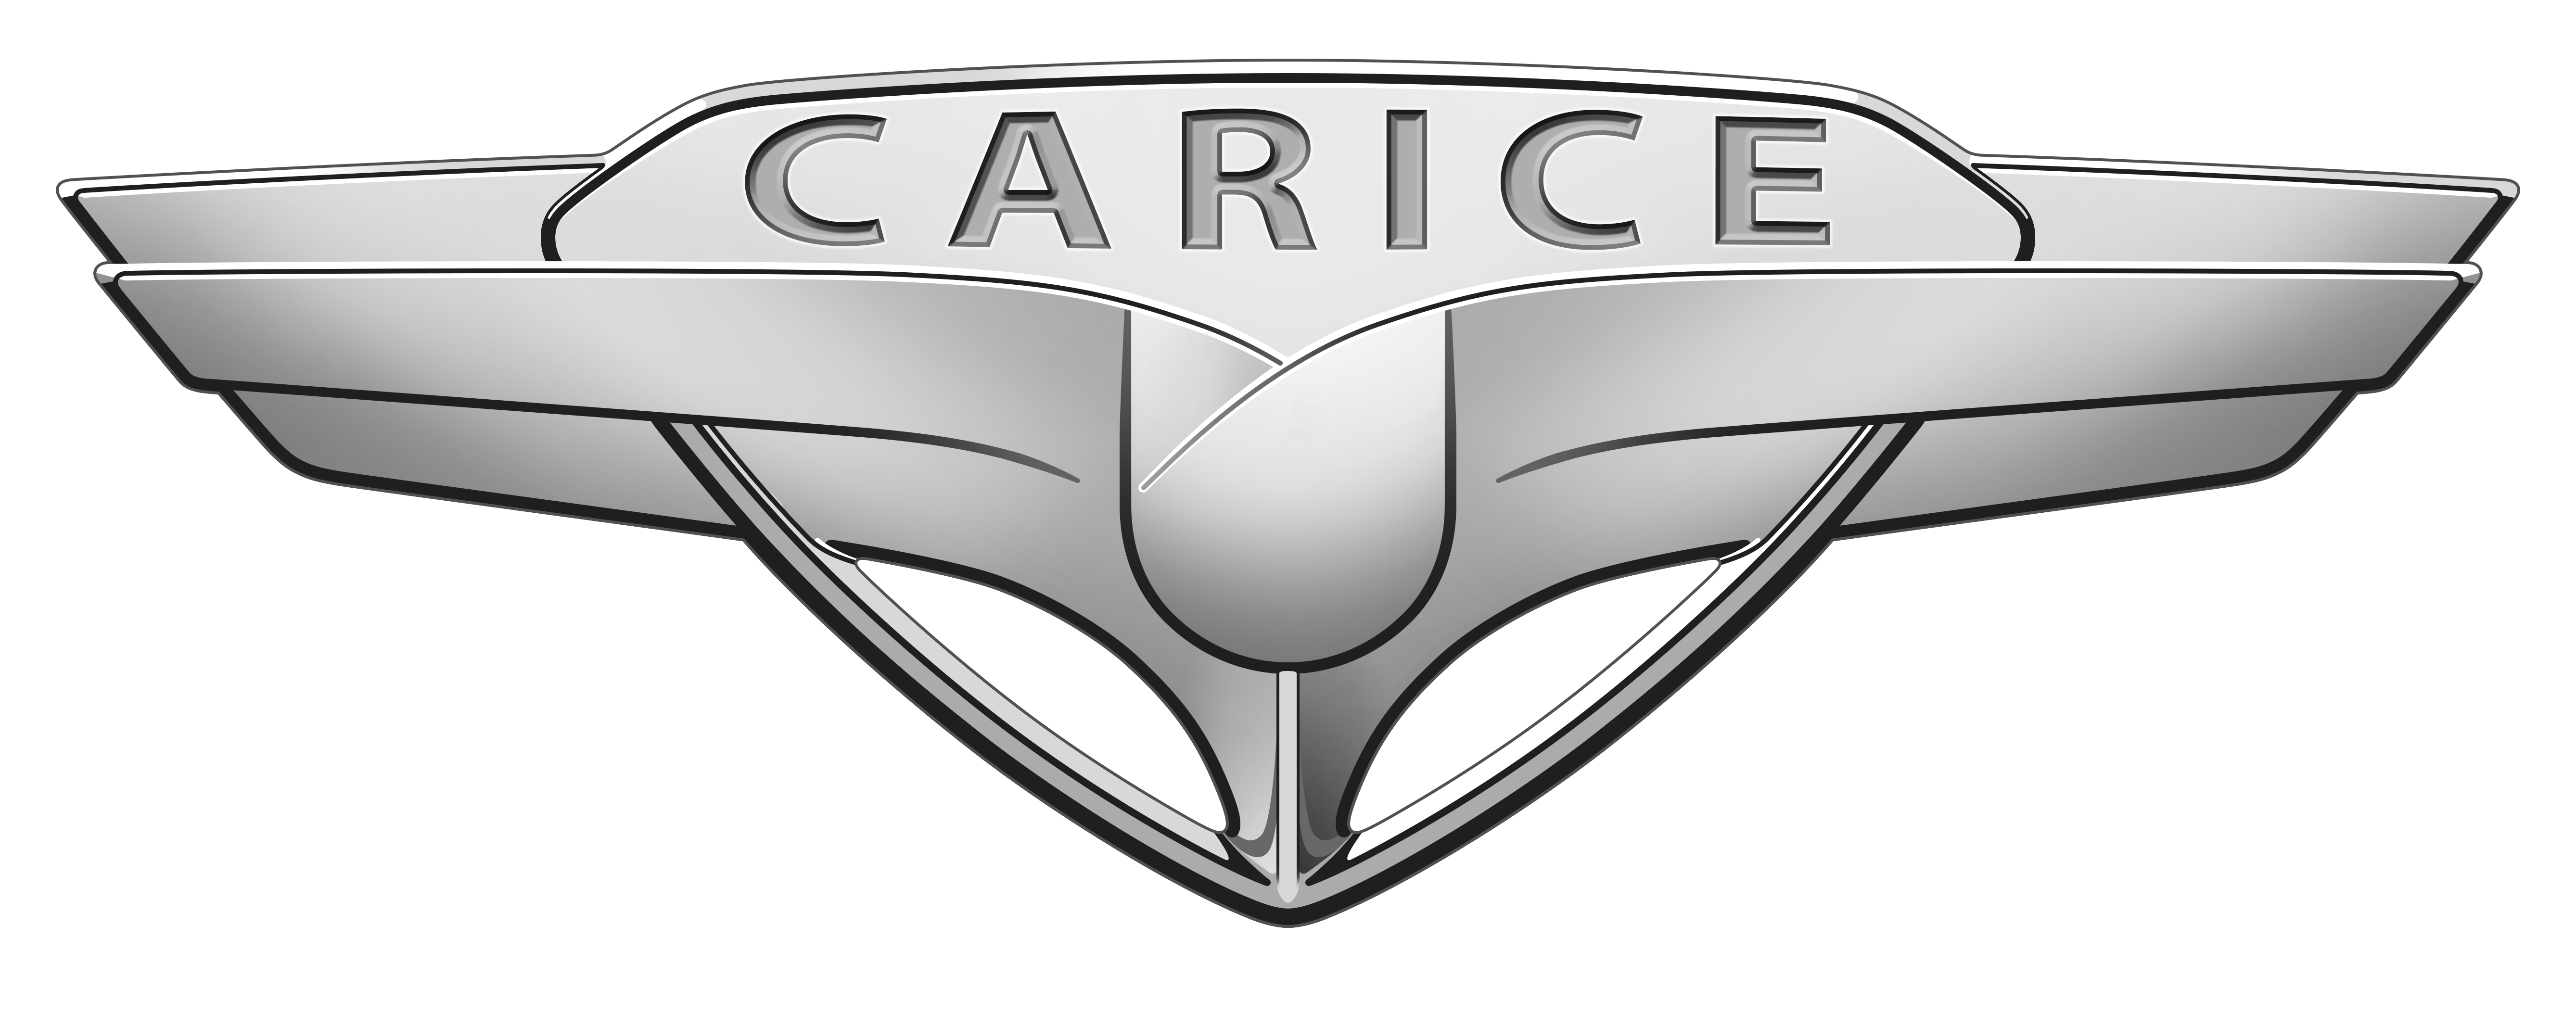 Carice Cars